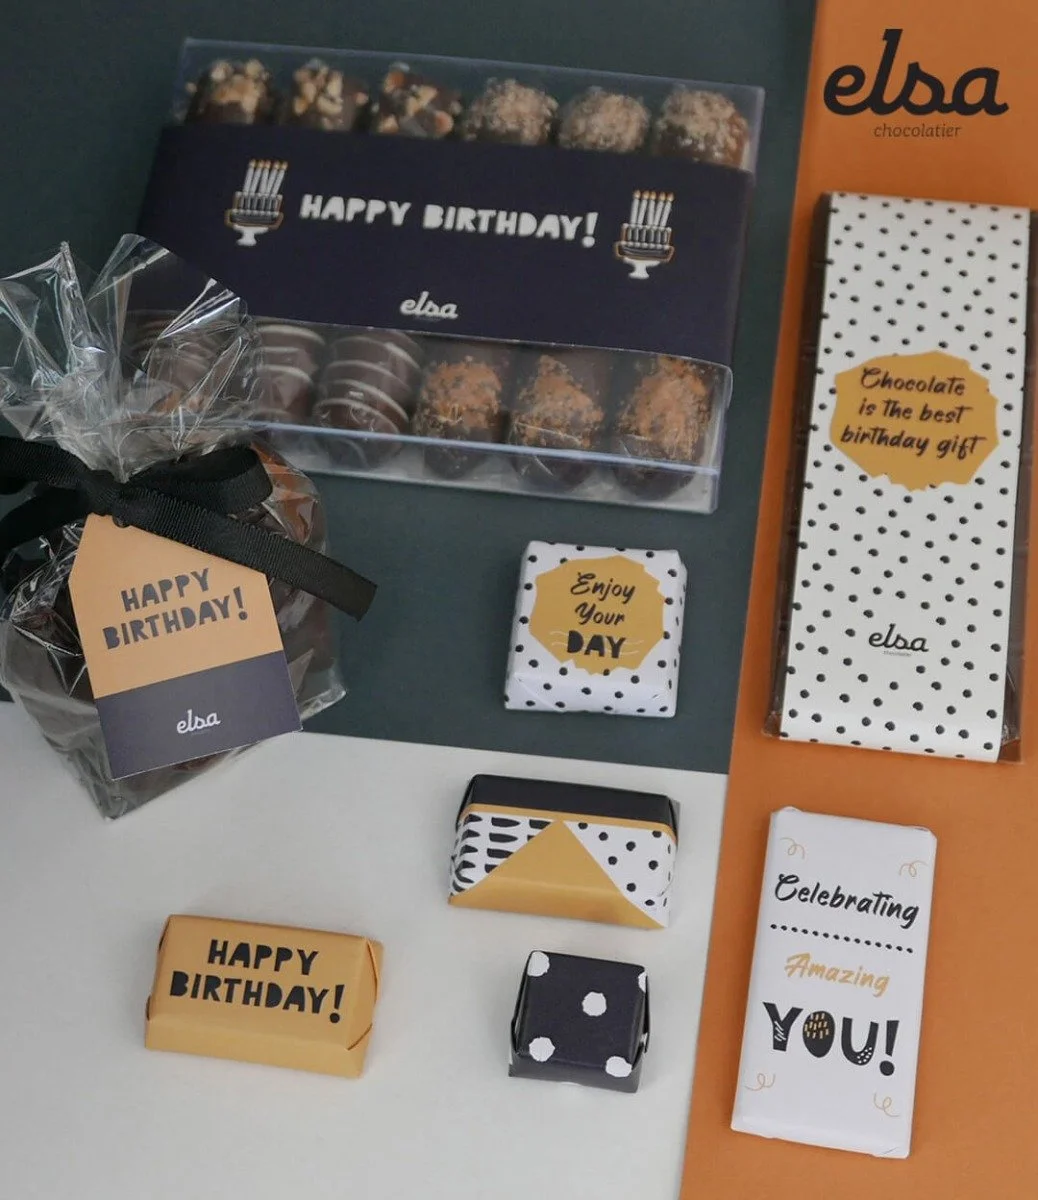 Celebrating Amazing You - Birthday Chocolate Hamper